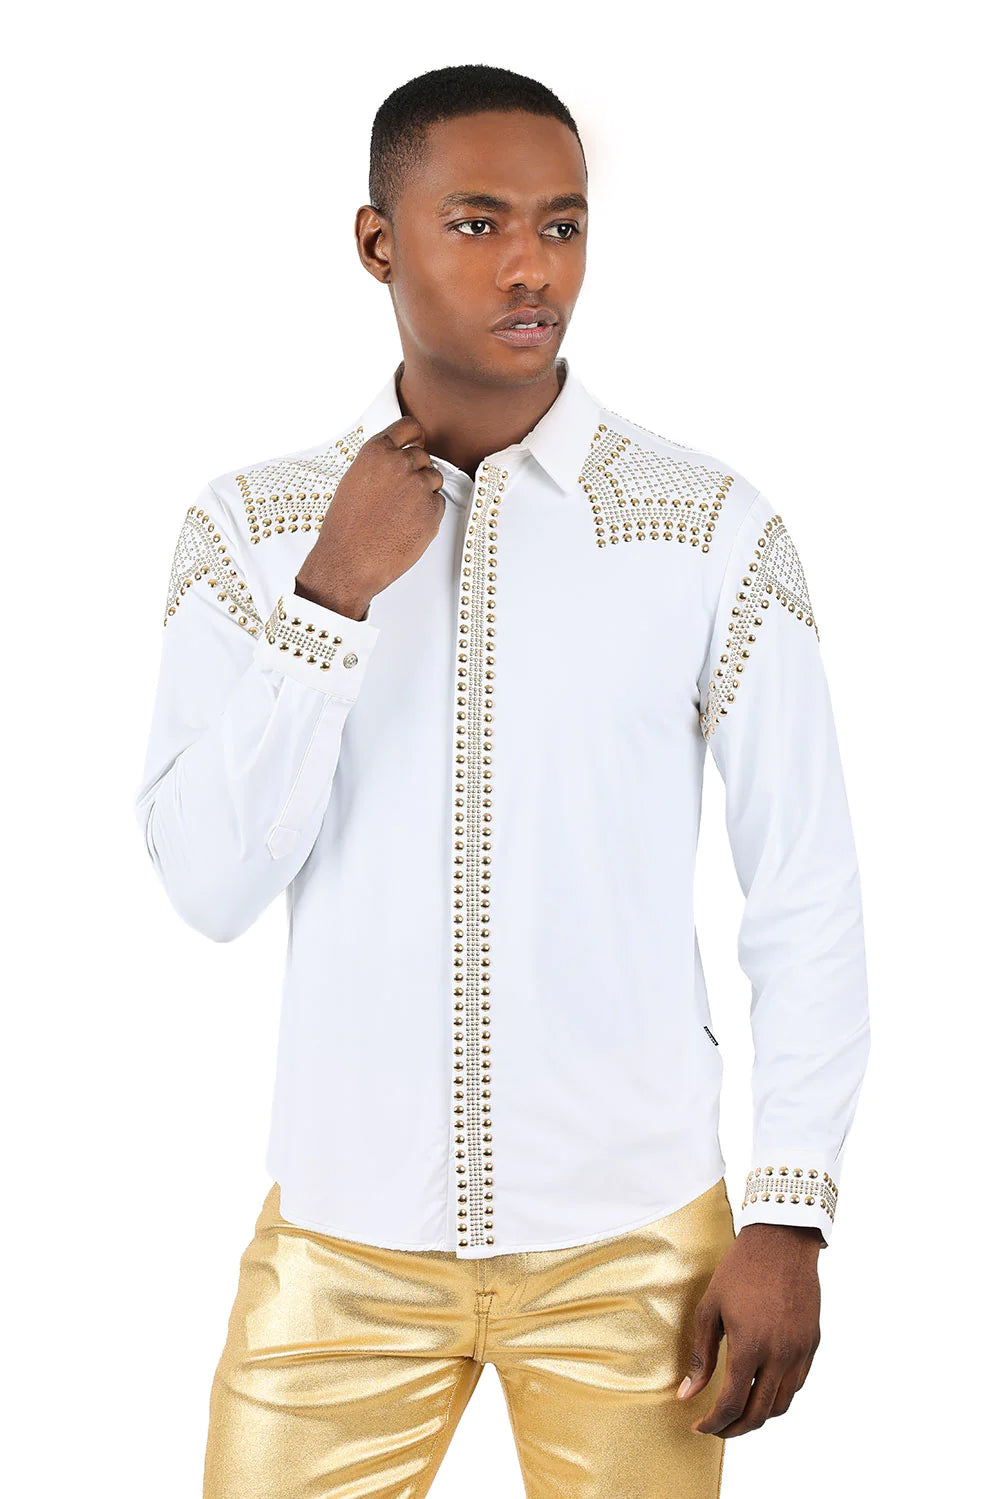 Bad Boy Barabas Long Sleeve Rivet Studded Shirt - White and Gold SHIRTS Barabas Collection Vercini